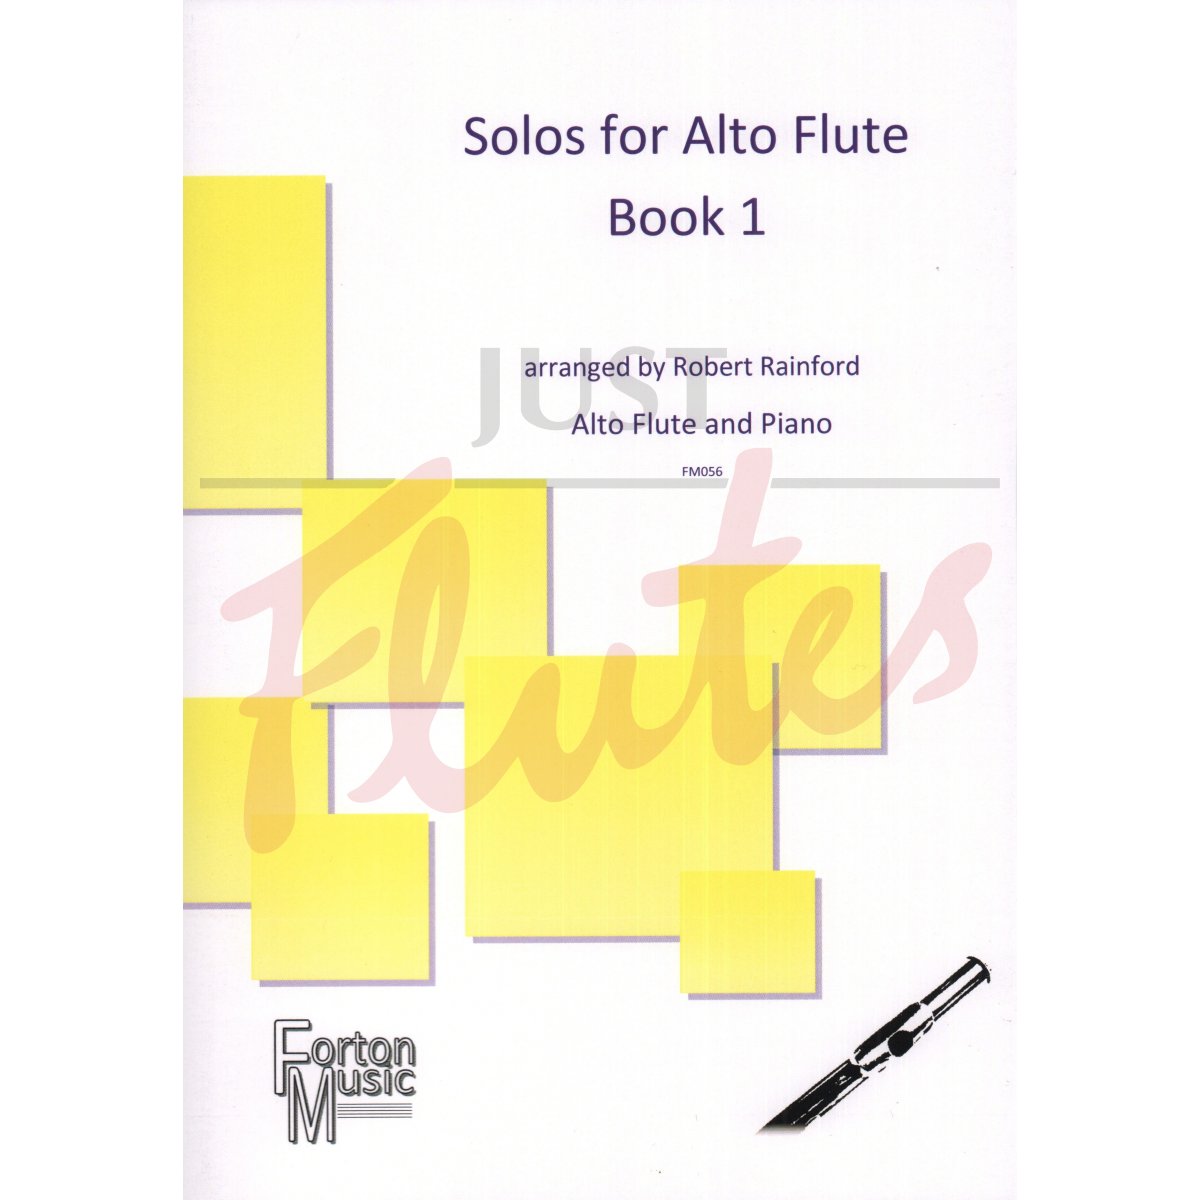 Solos for Alto Flute Book 1, with Piano Accompaniment